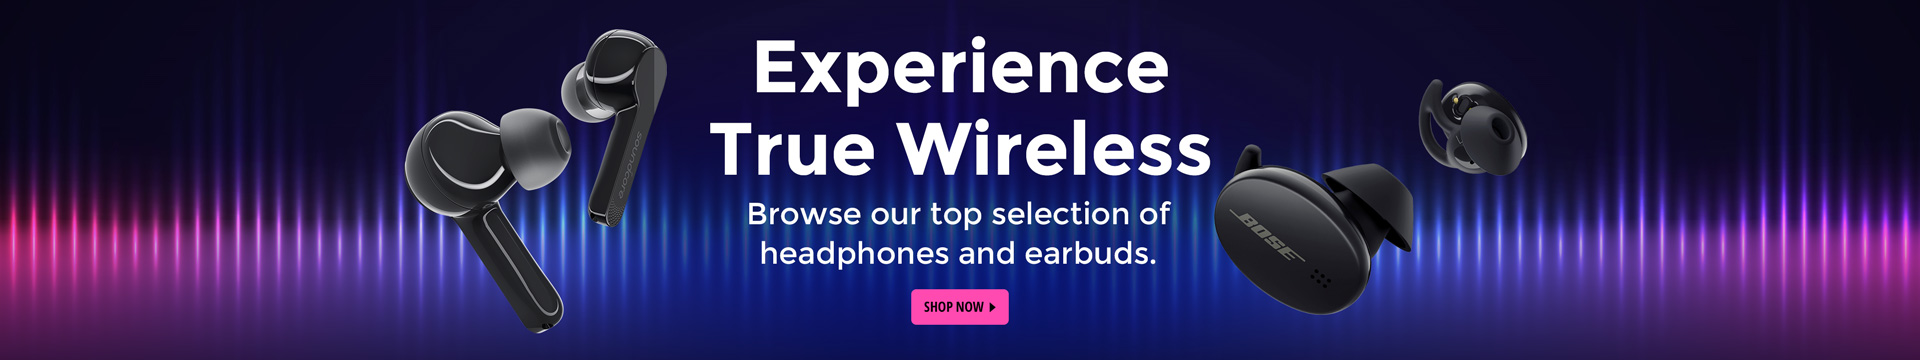 Experience True Wireless